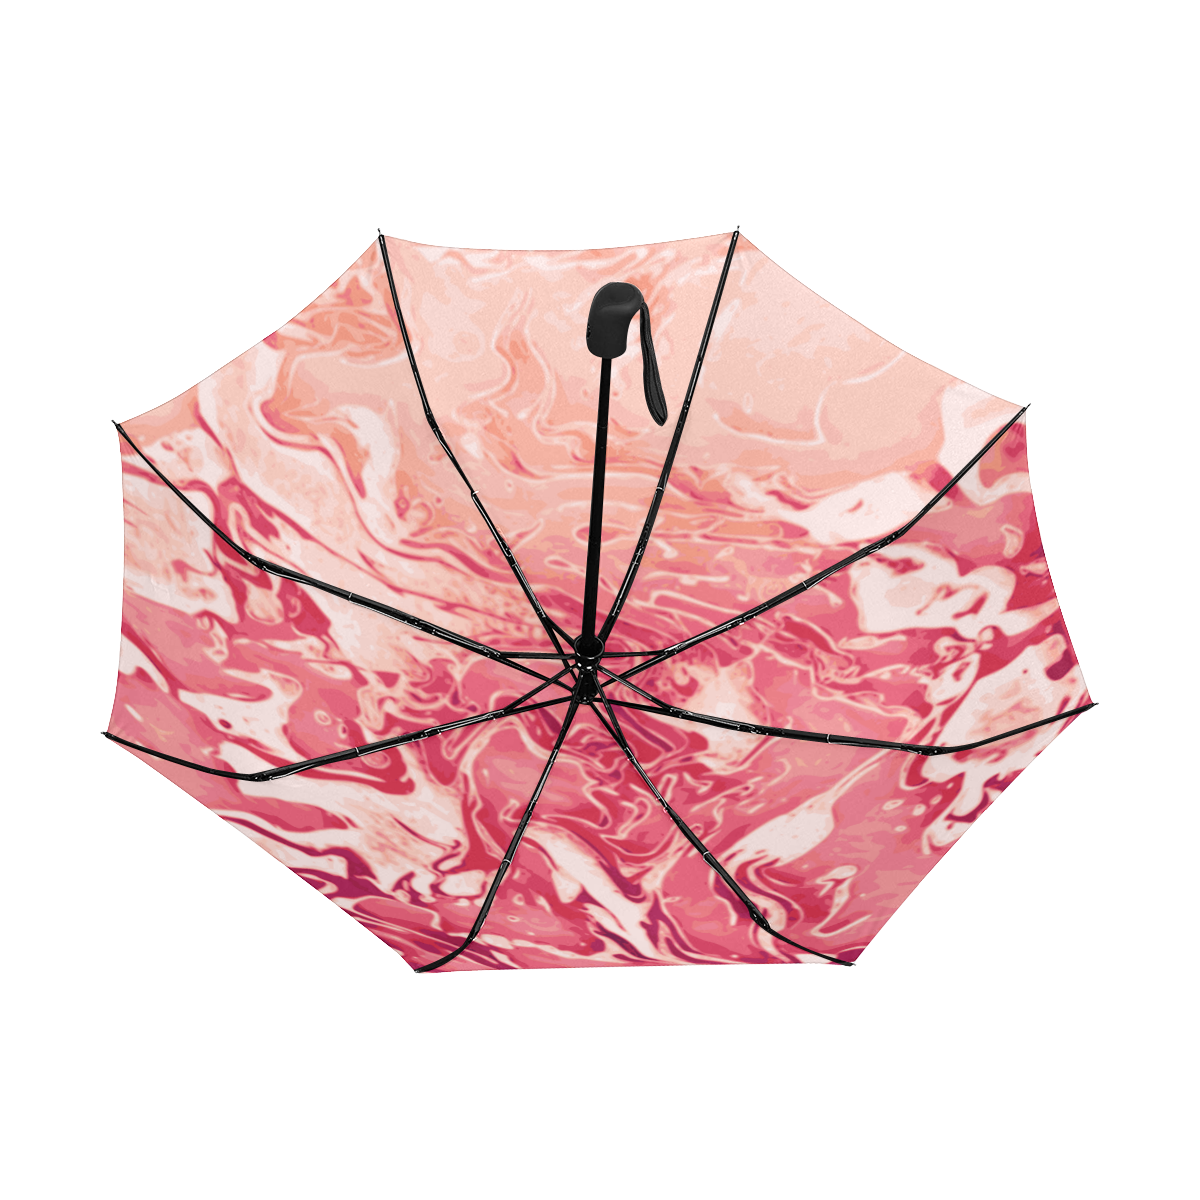 Red Wine Celebration - red orange pink abstract swirls Anti-UV Auto-Foldable Umbrella (Underside Printing) (U06)